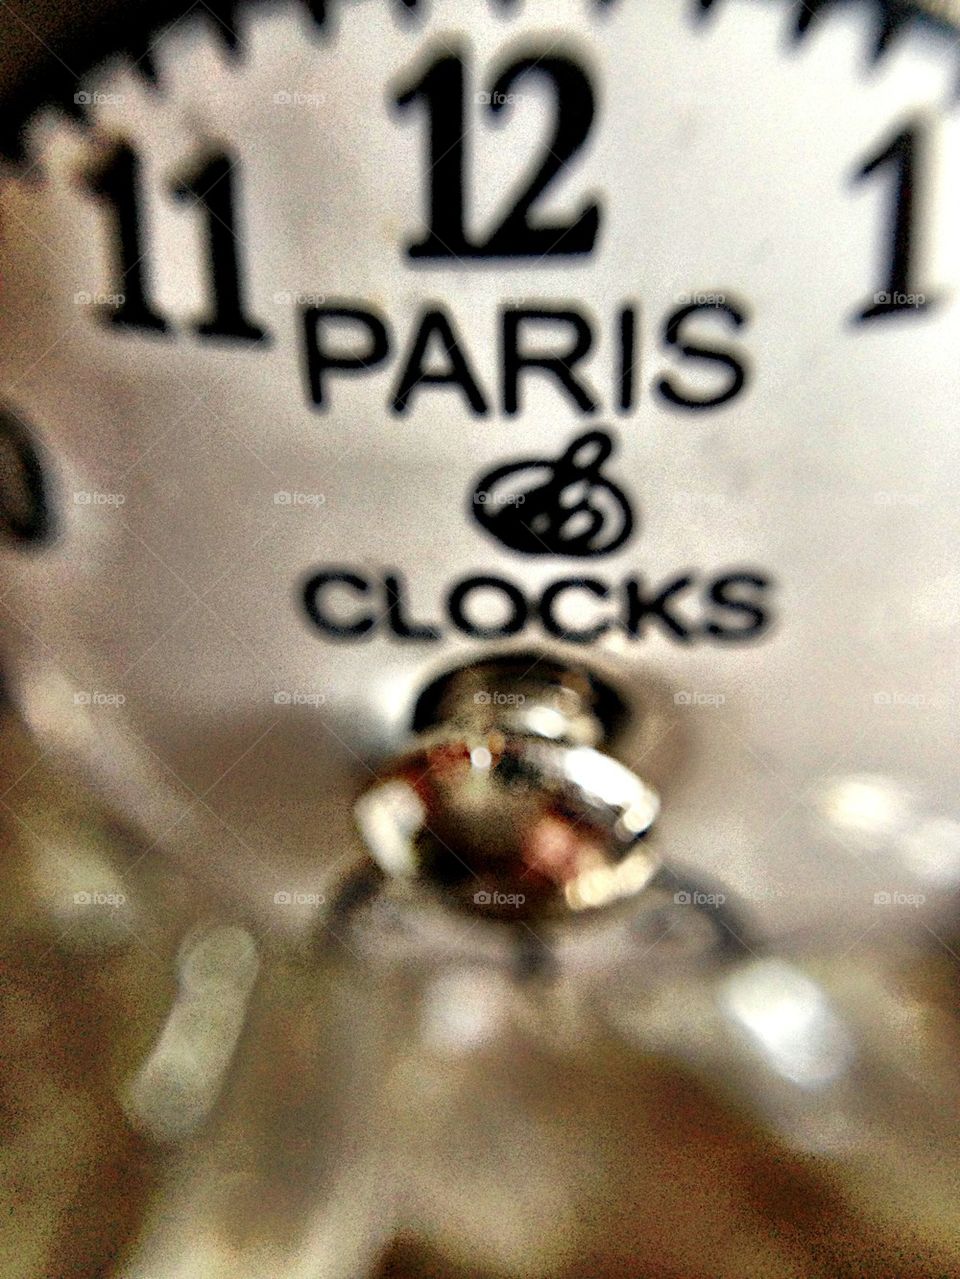 Paris clocks!